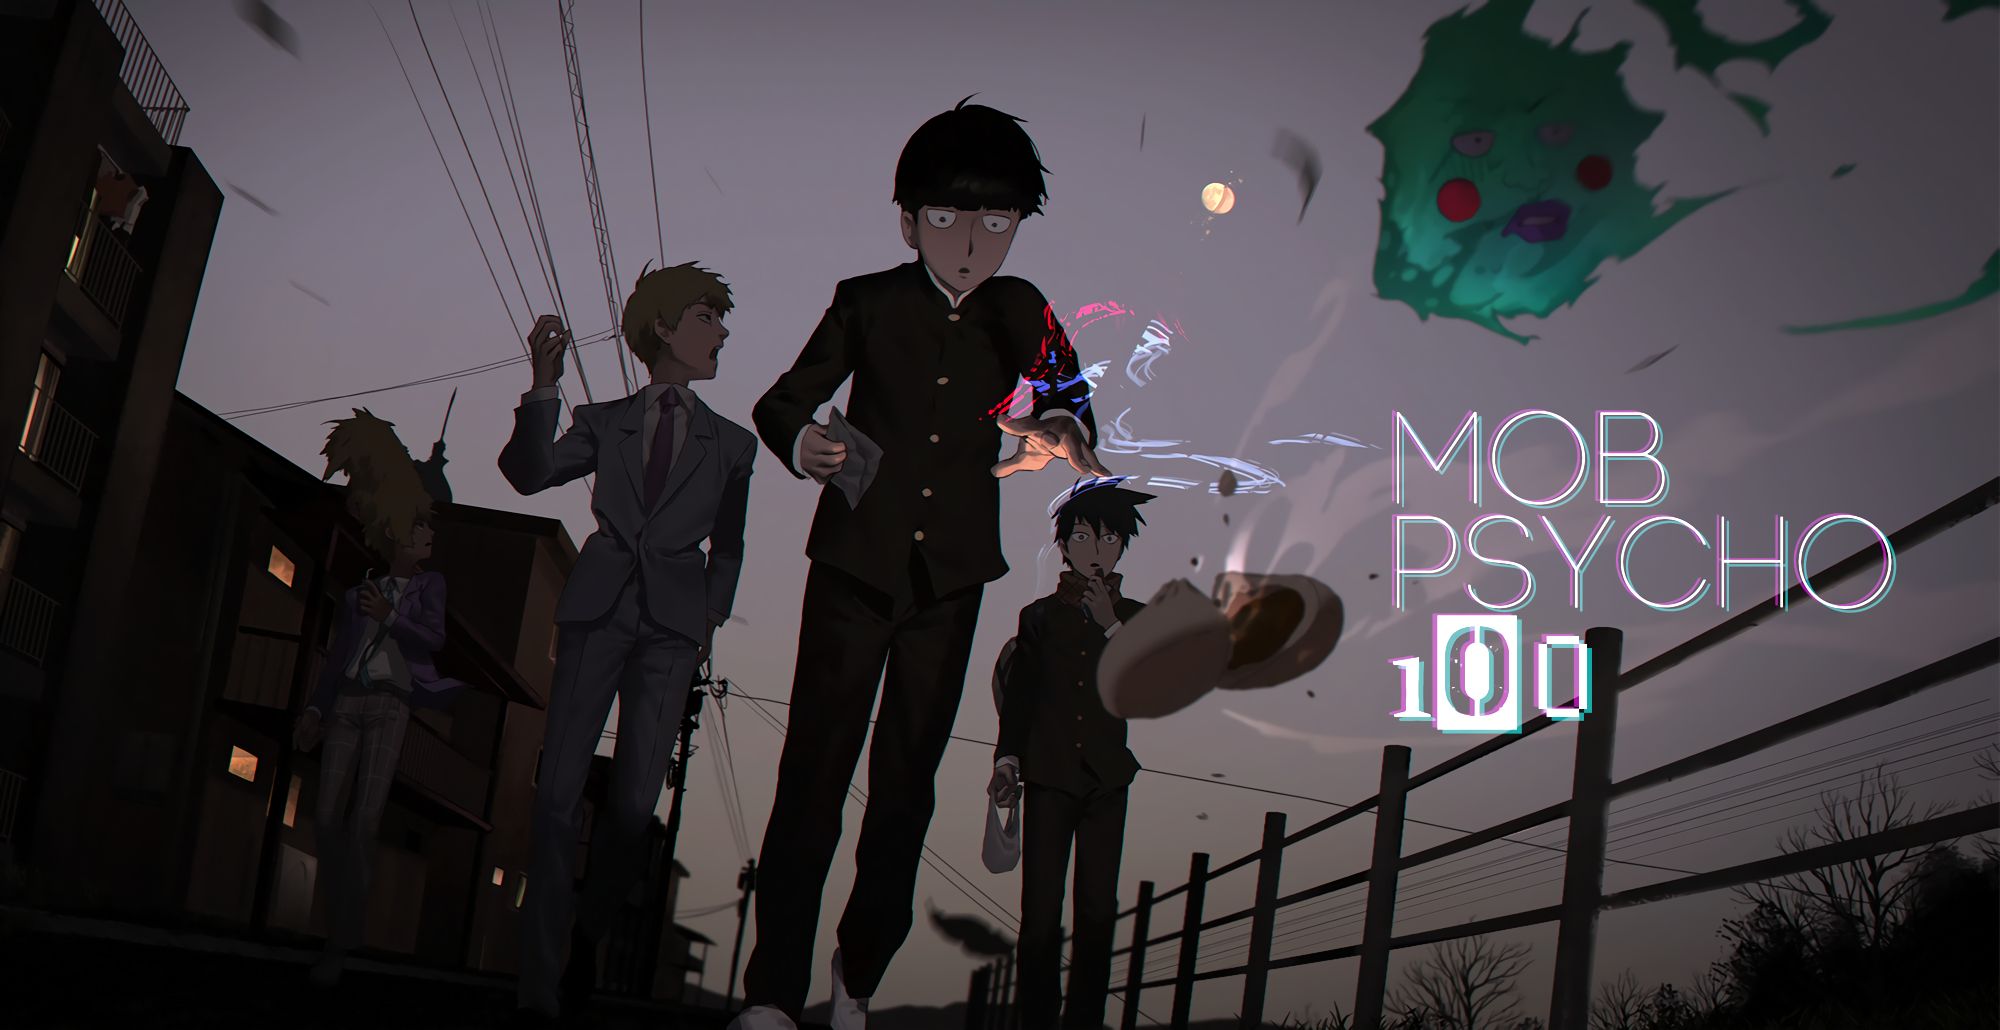 mob psycho 100, anime